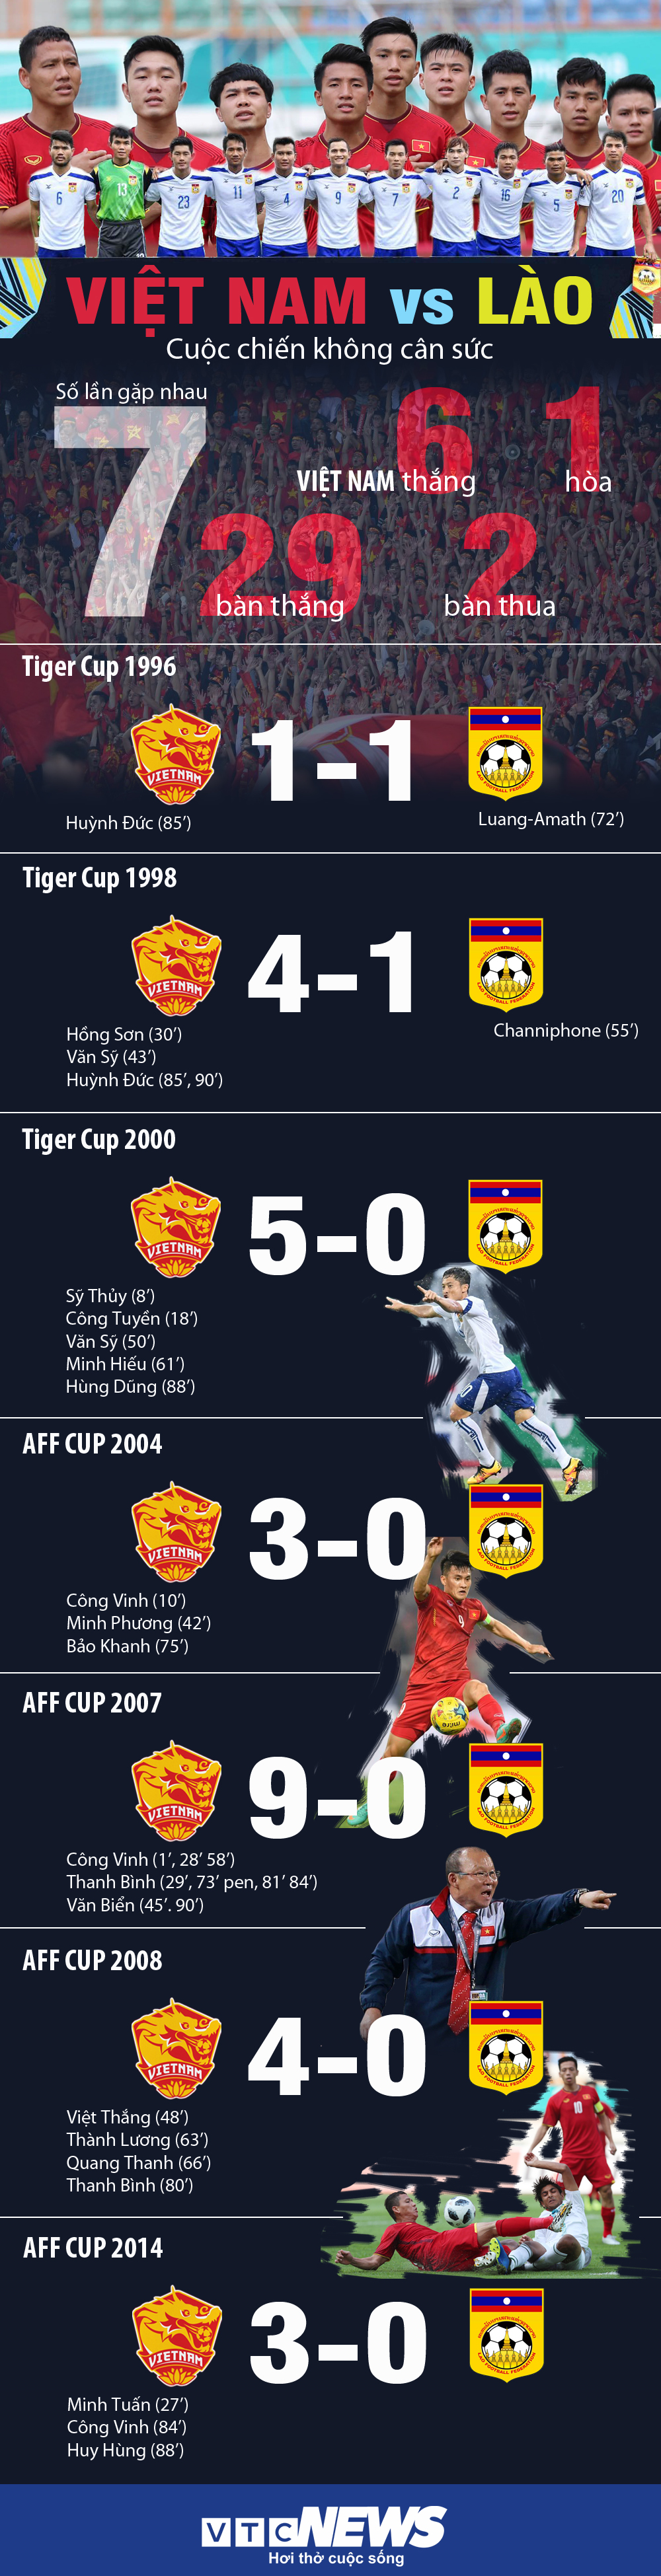 infographic viet nam vs lao 2 thap ky cuoc chien khong can suc